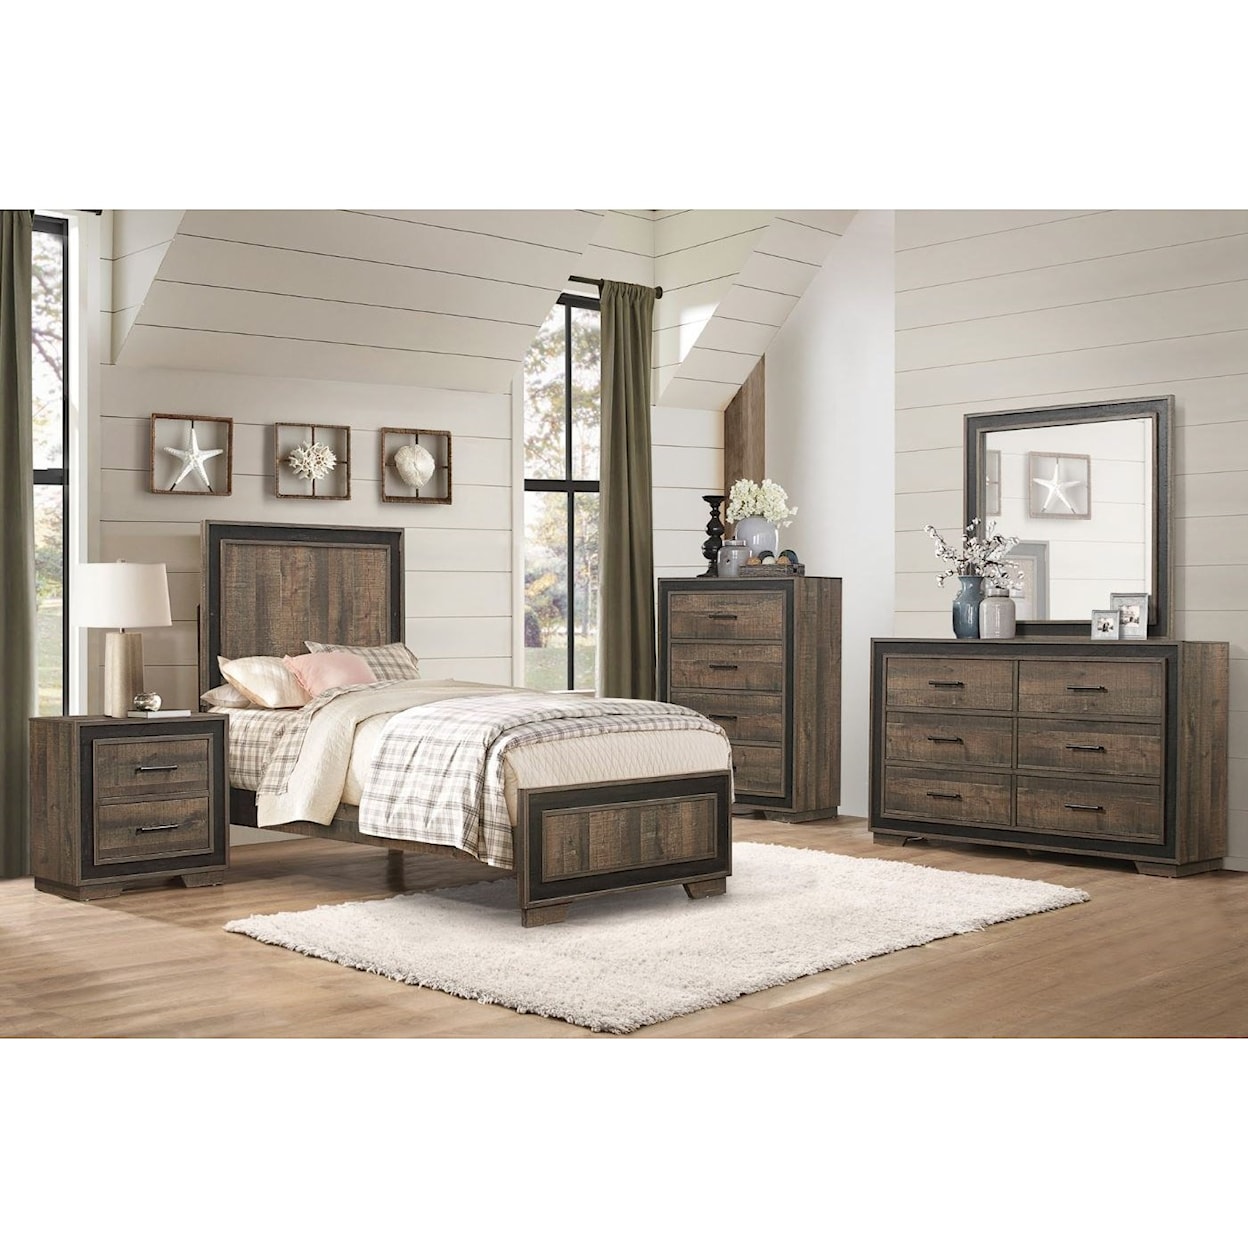 Homelegance Furniture Ellendale Twin Bedroom Group